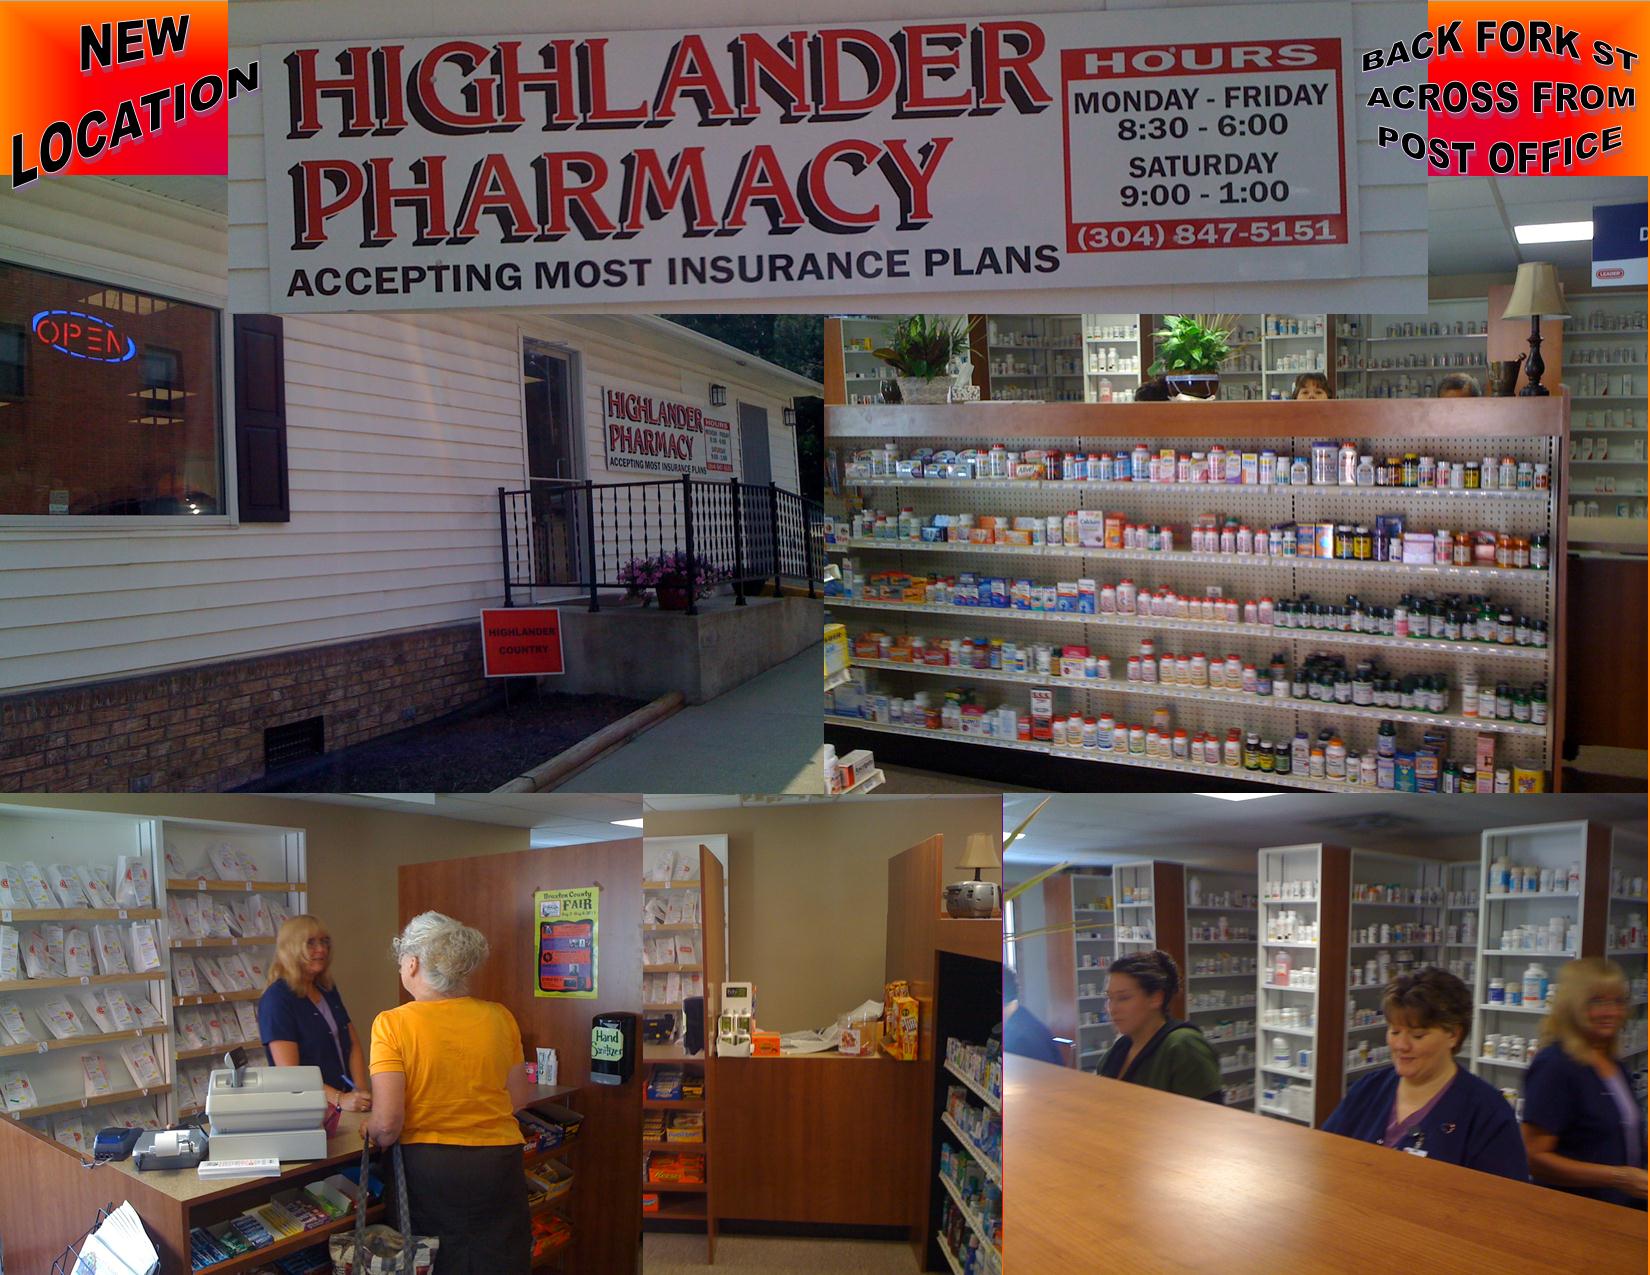 Highlander Pharmacy